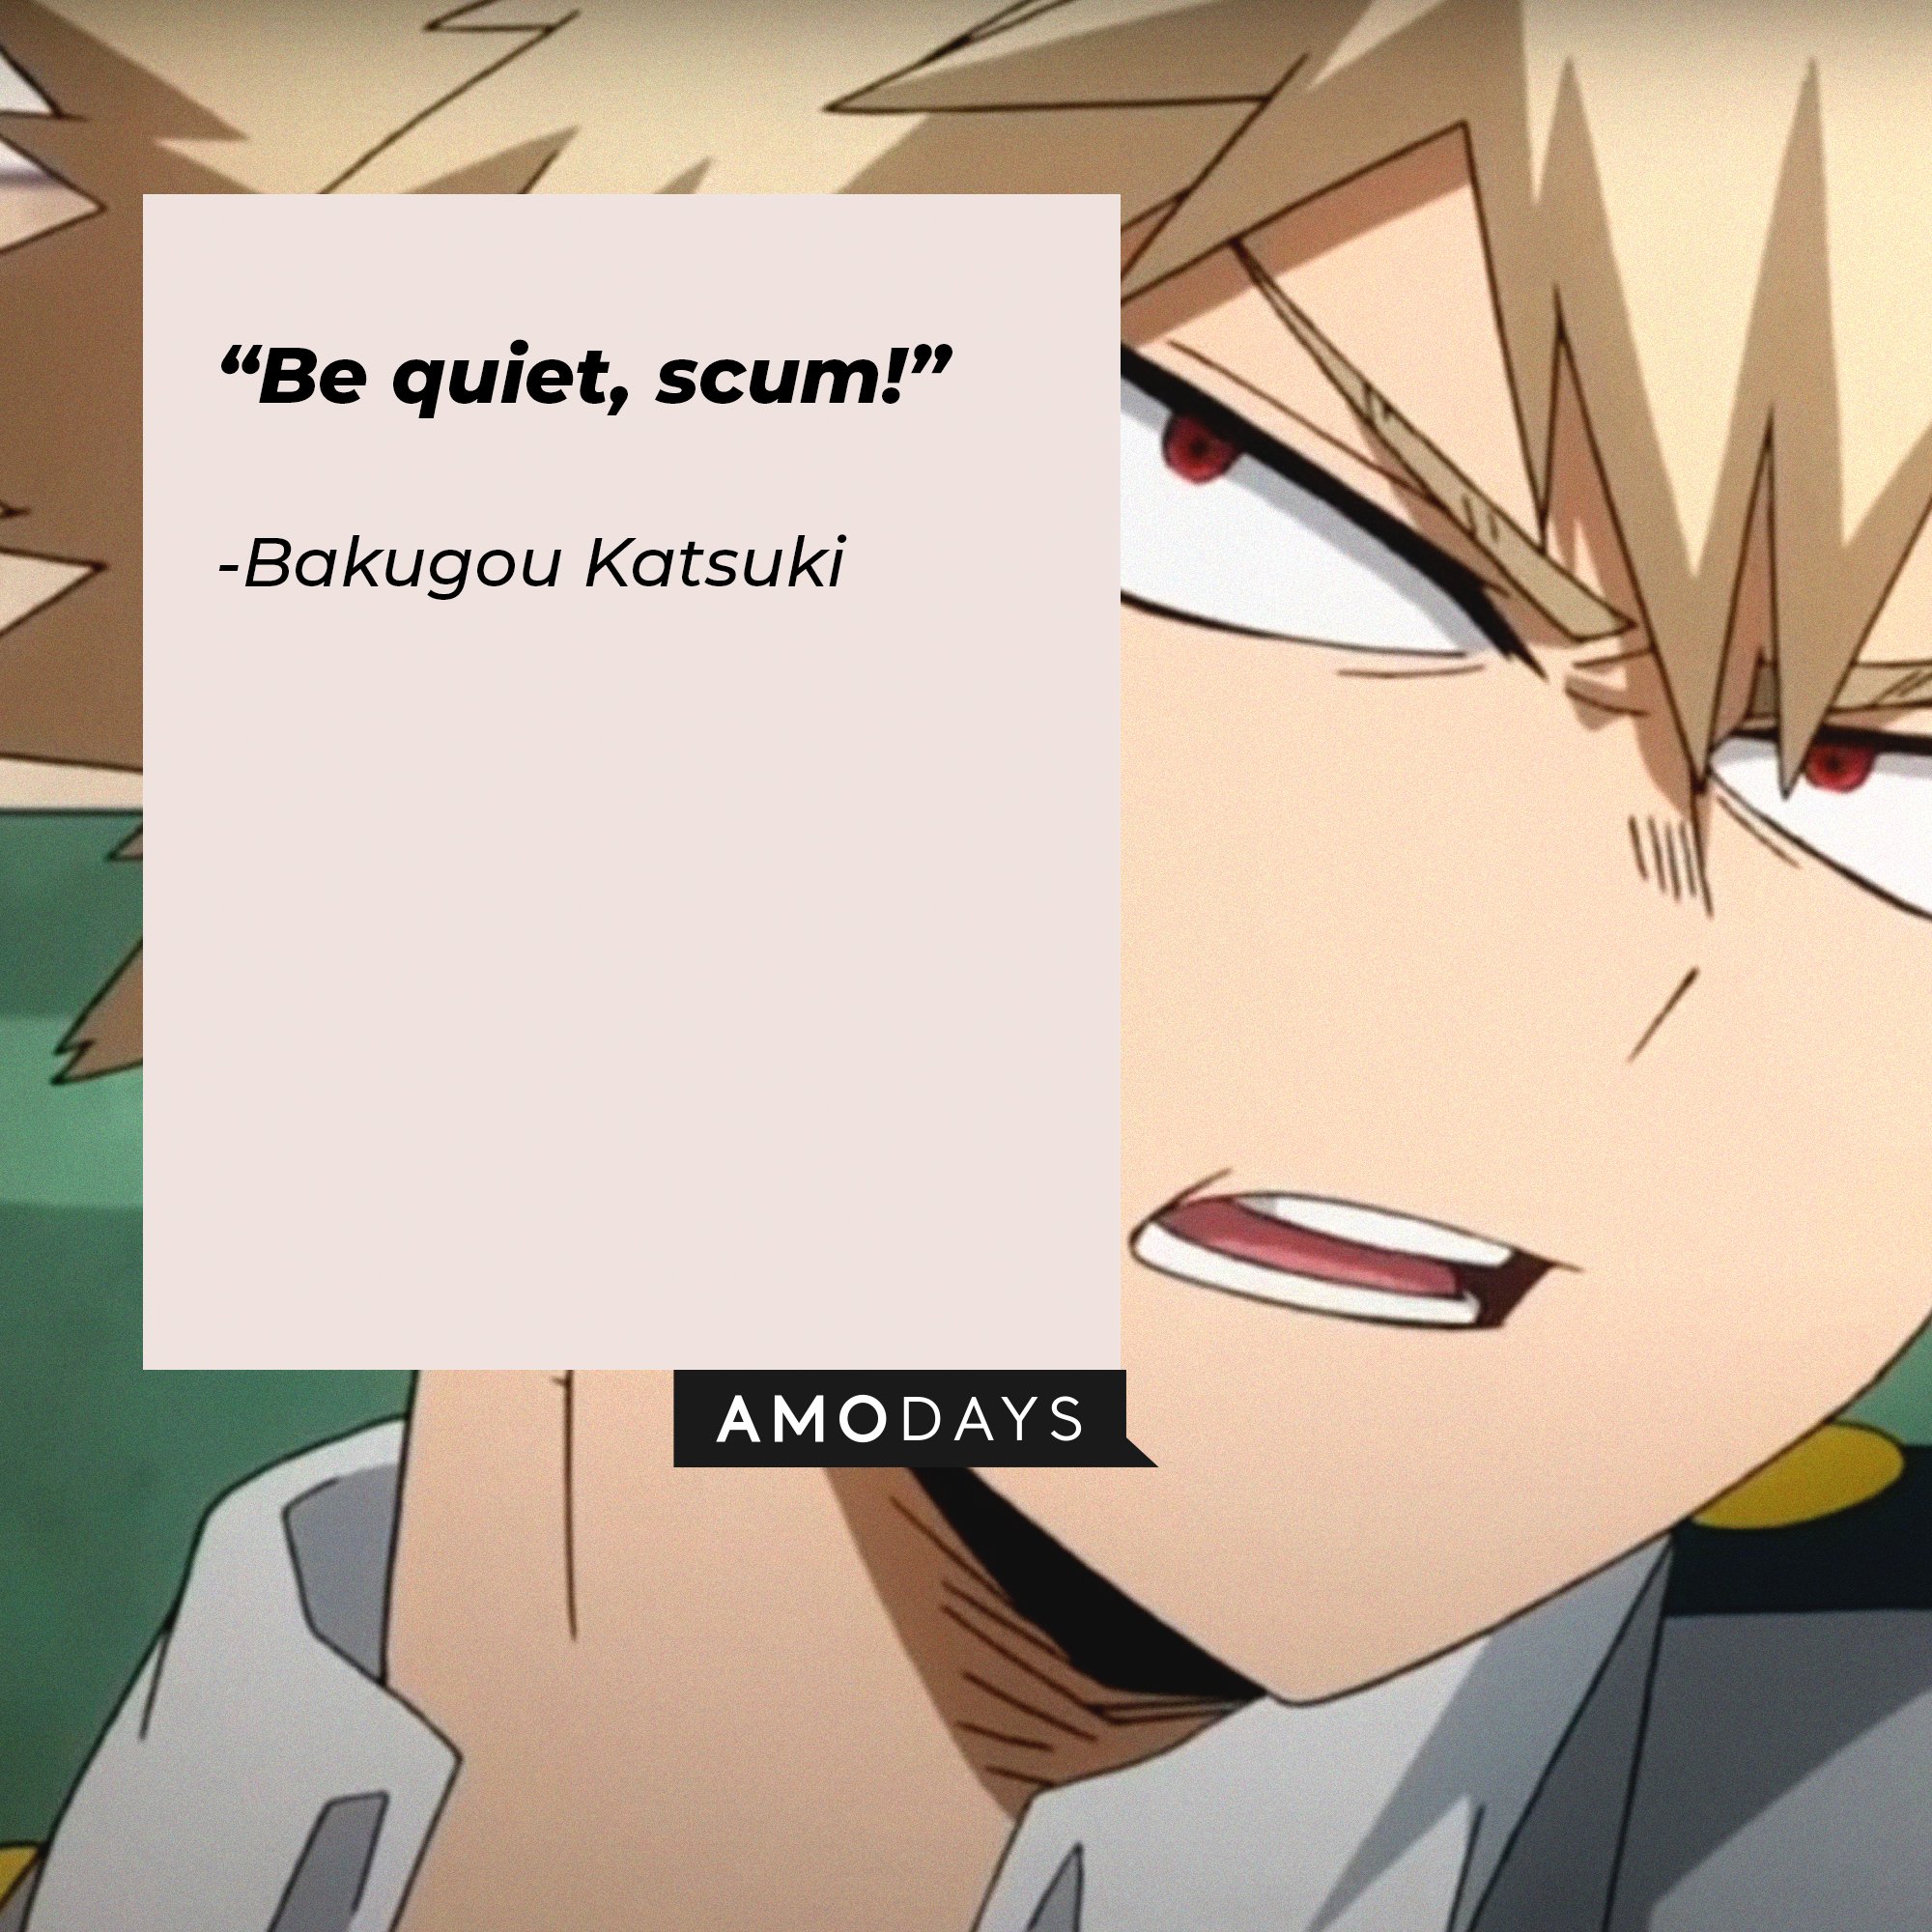 Bakugou Katsuki’s quote: "Be quiet, scum!" | Image: AmoDays